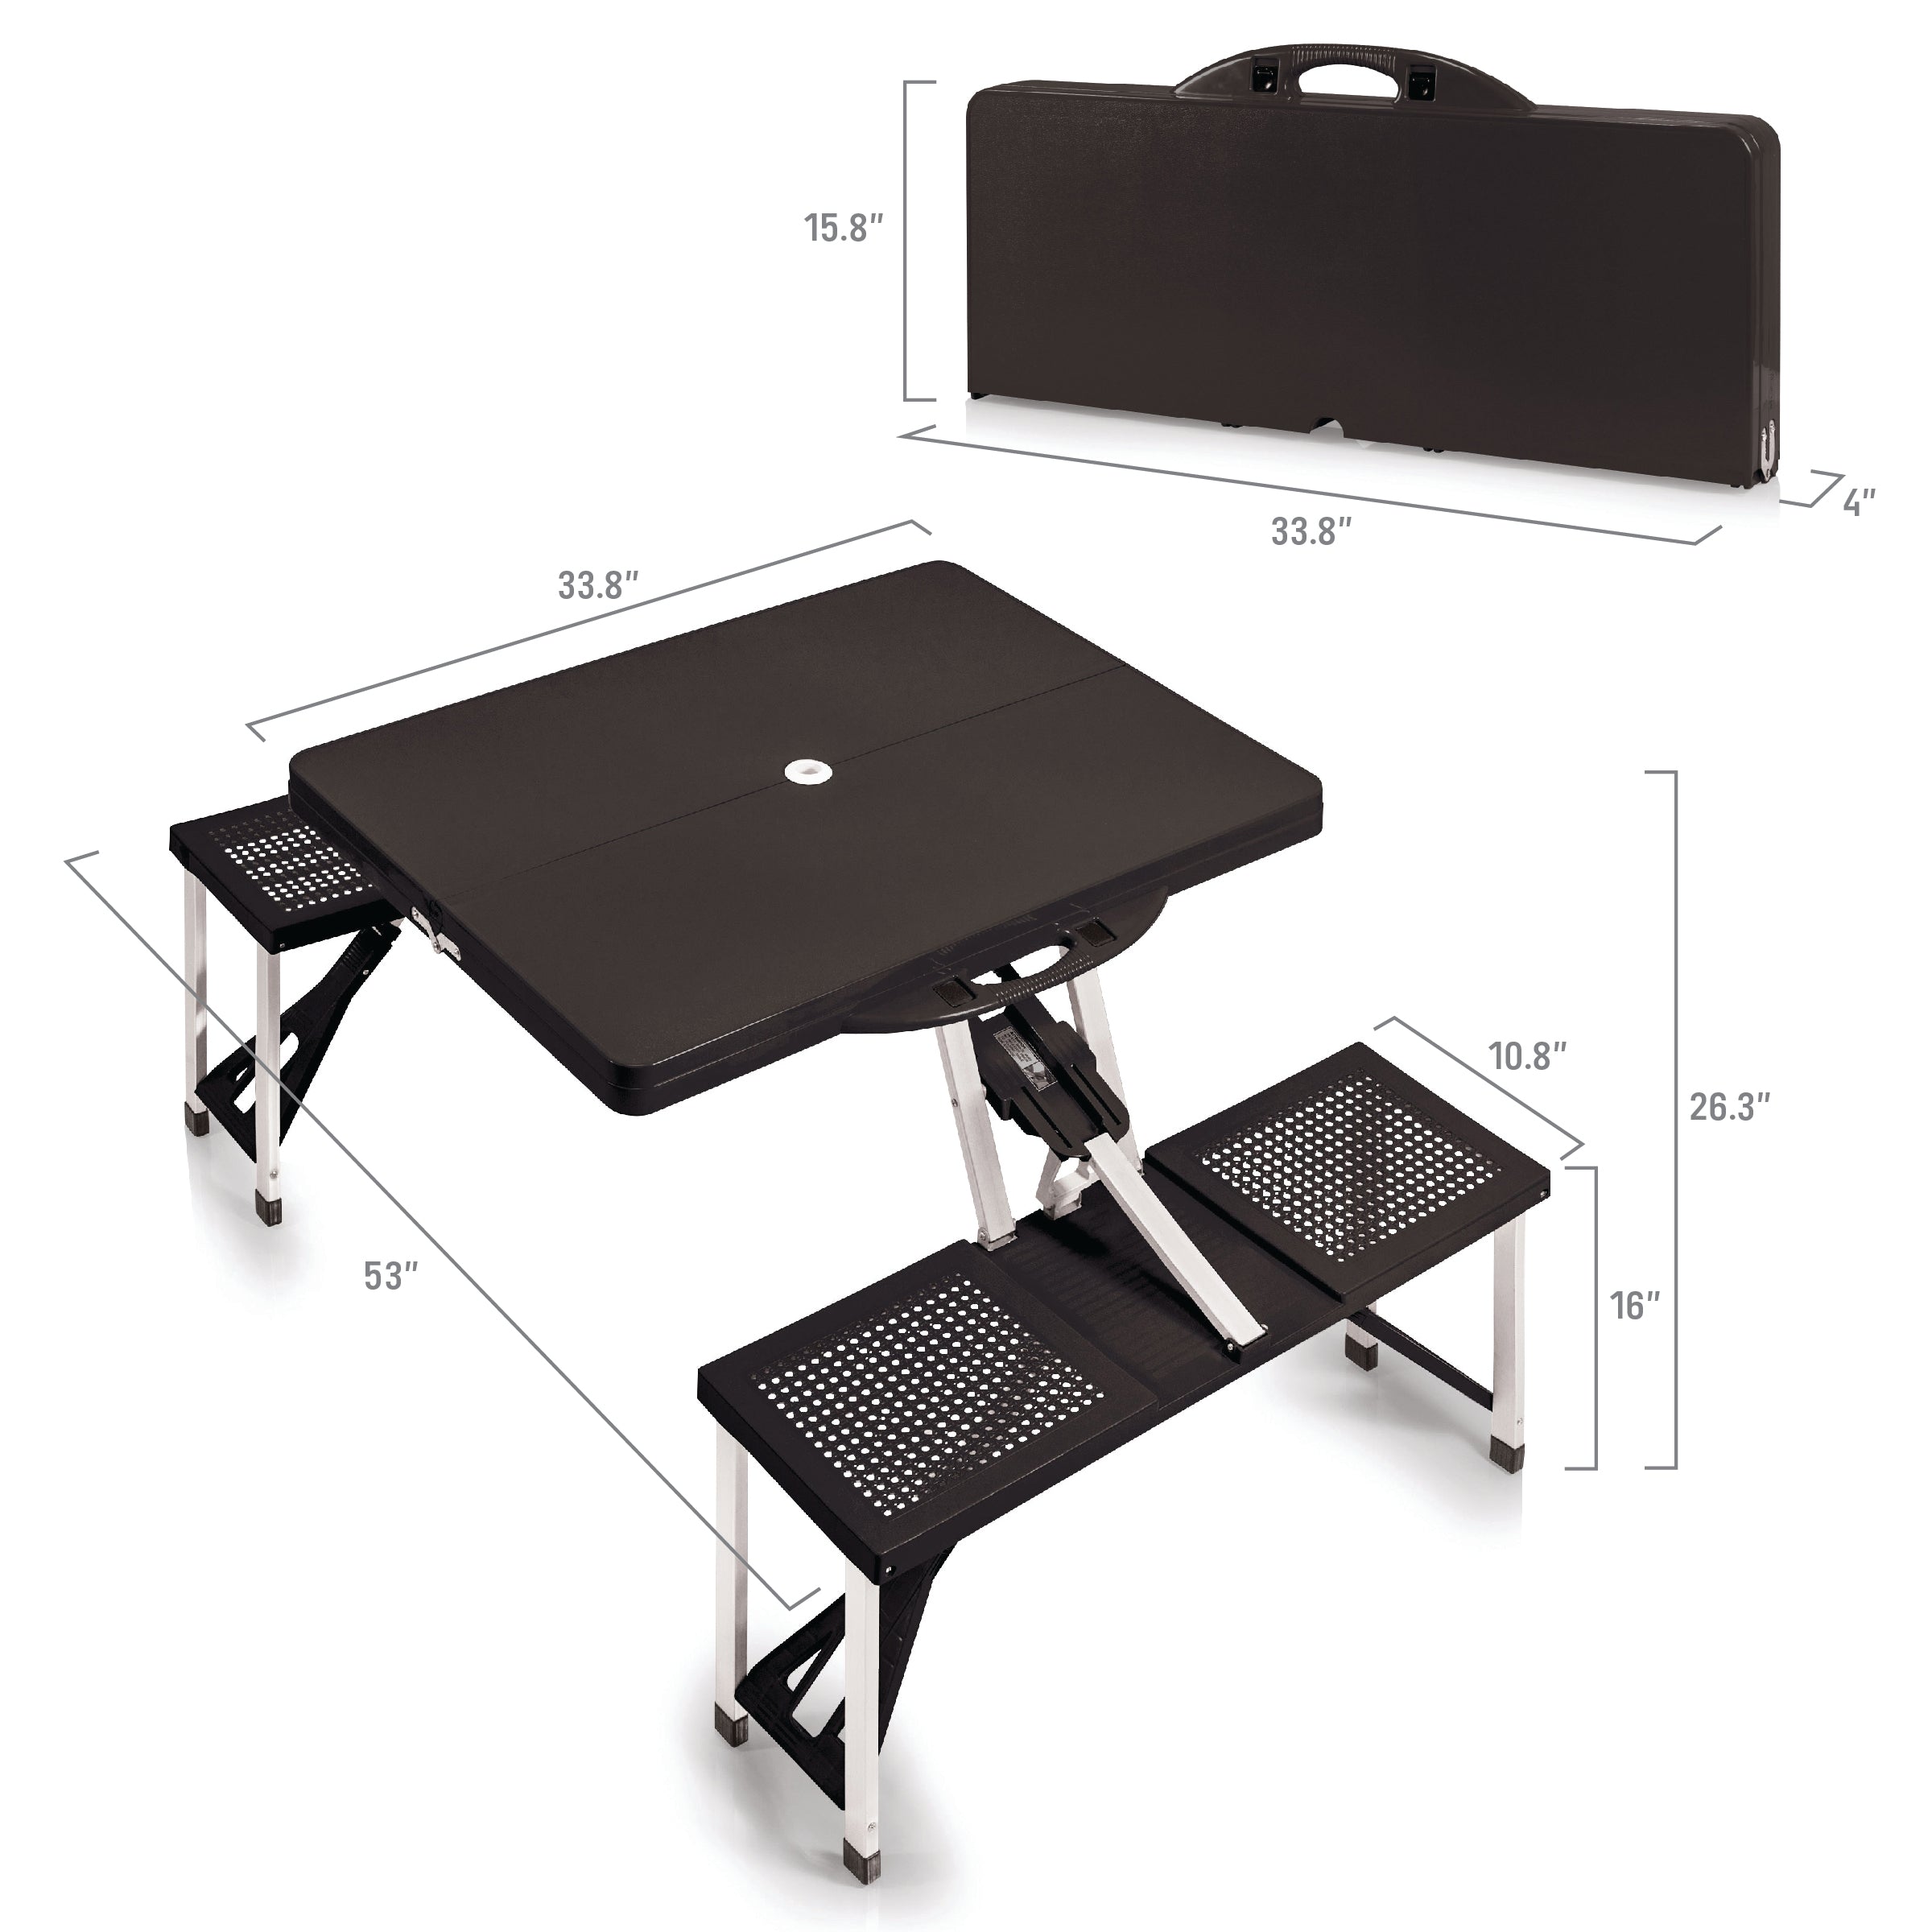 Baltimore Orioles Baseball Diamond - Picnic Table Portable Folding Table with Seats